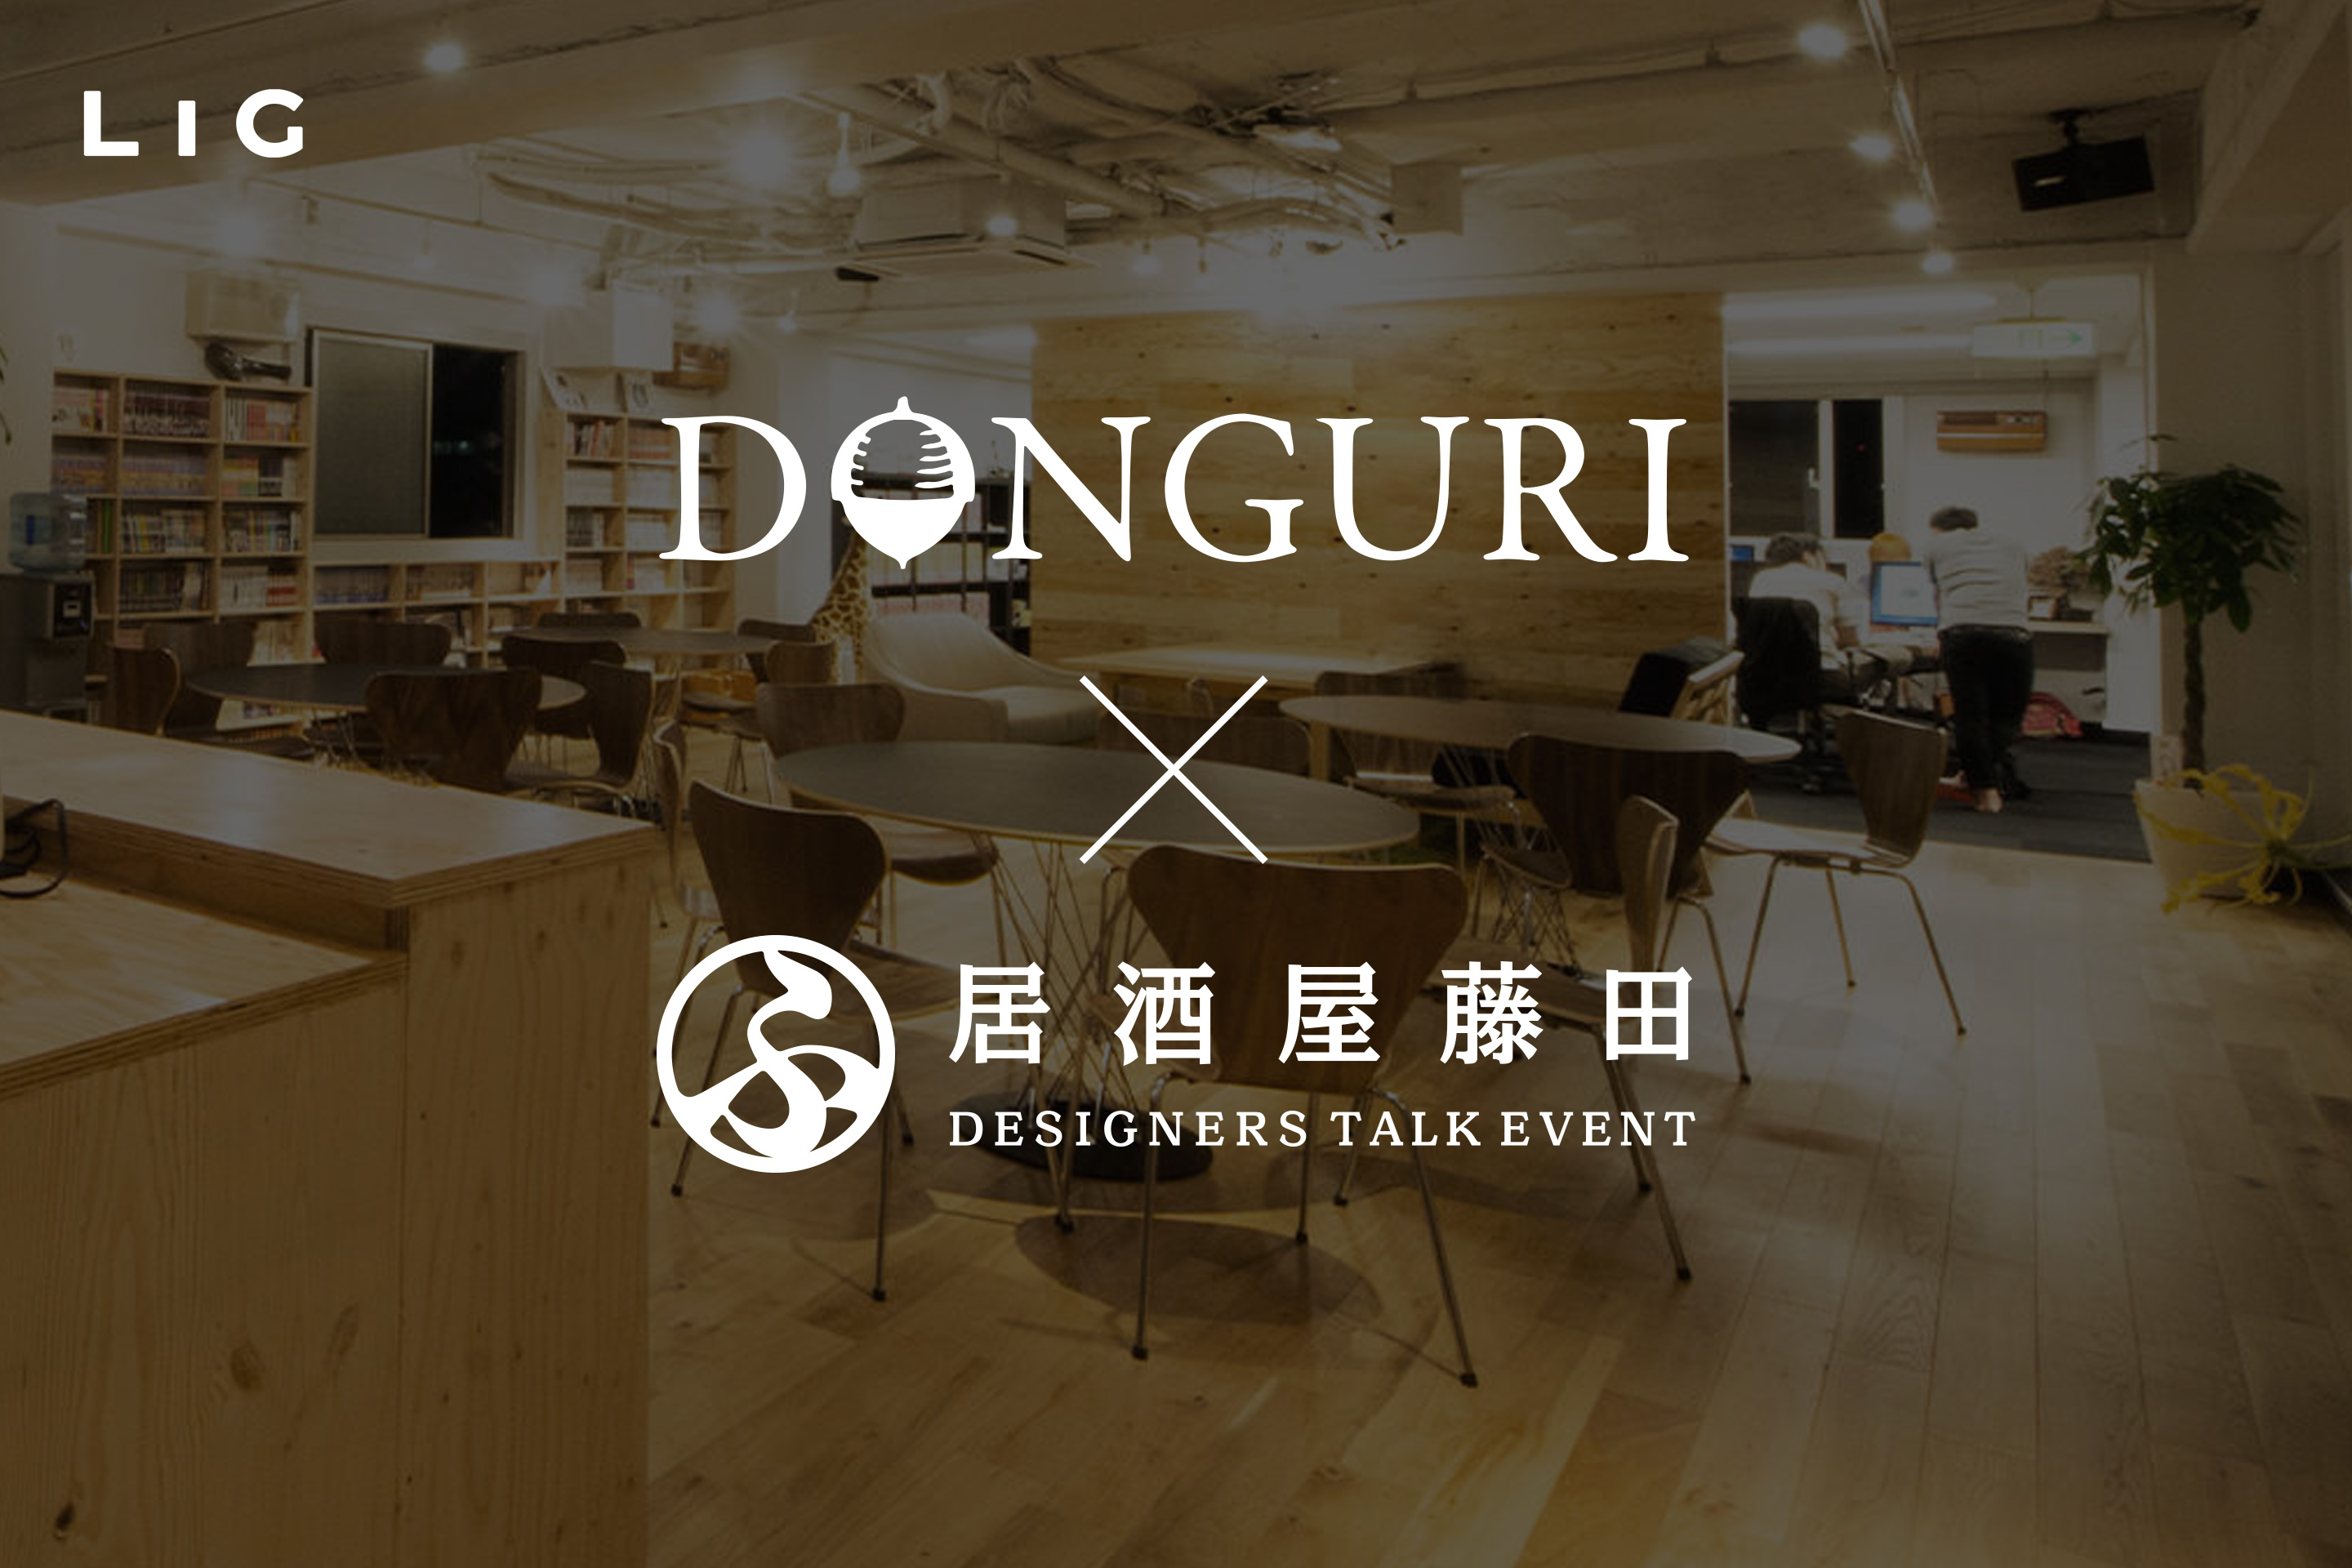 【DONGURI×LIG】居酒屋 藤田 ~しっぽりとデザインについて語る会 第4回~ を開催します